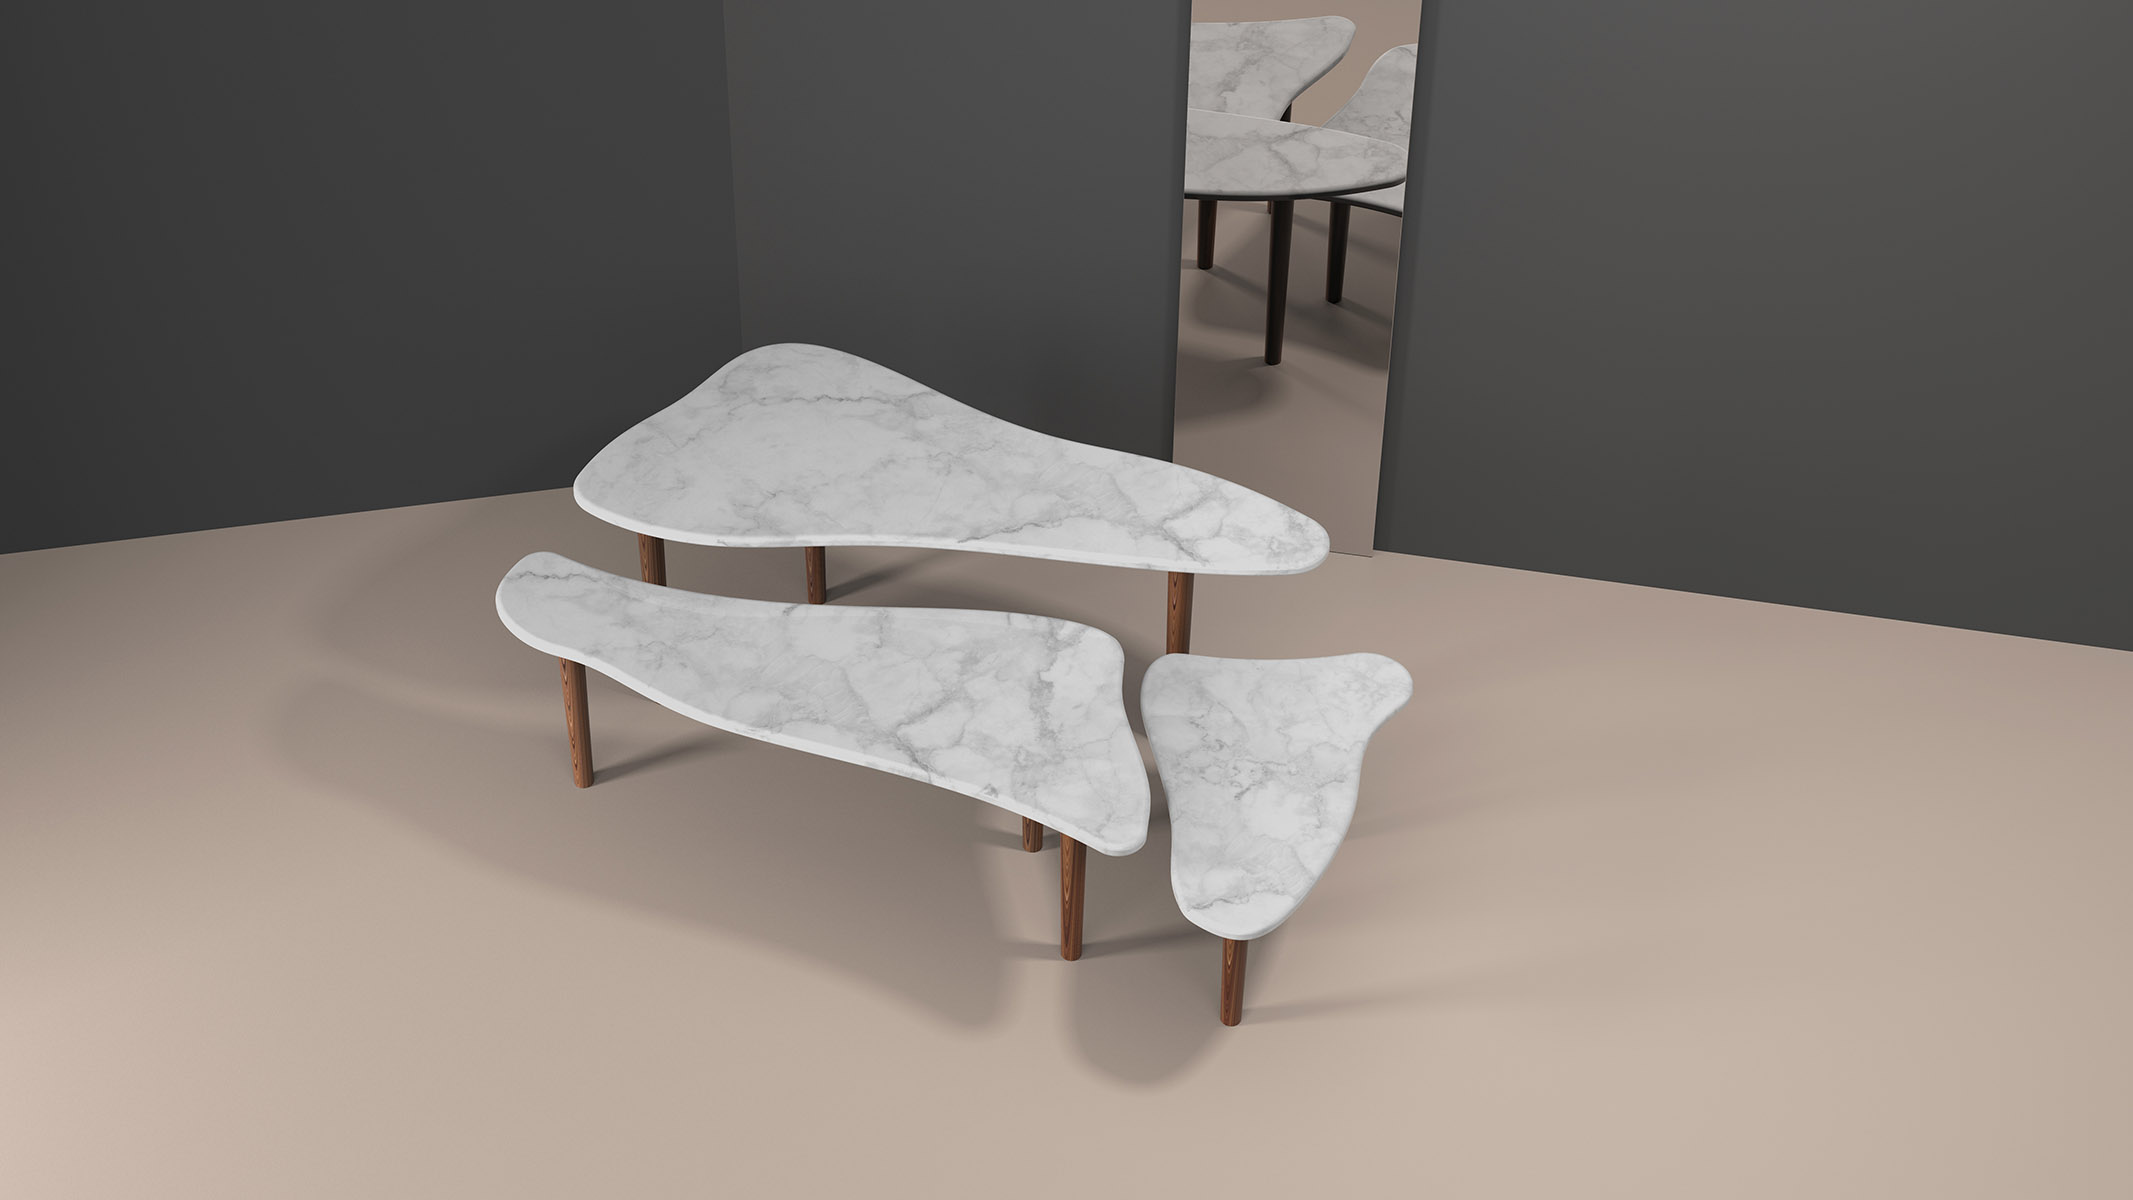 aspasia coffee table designed by molenore  2019